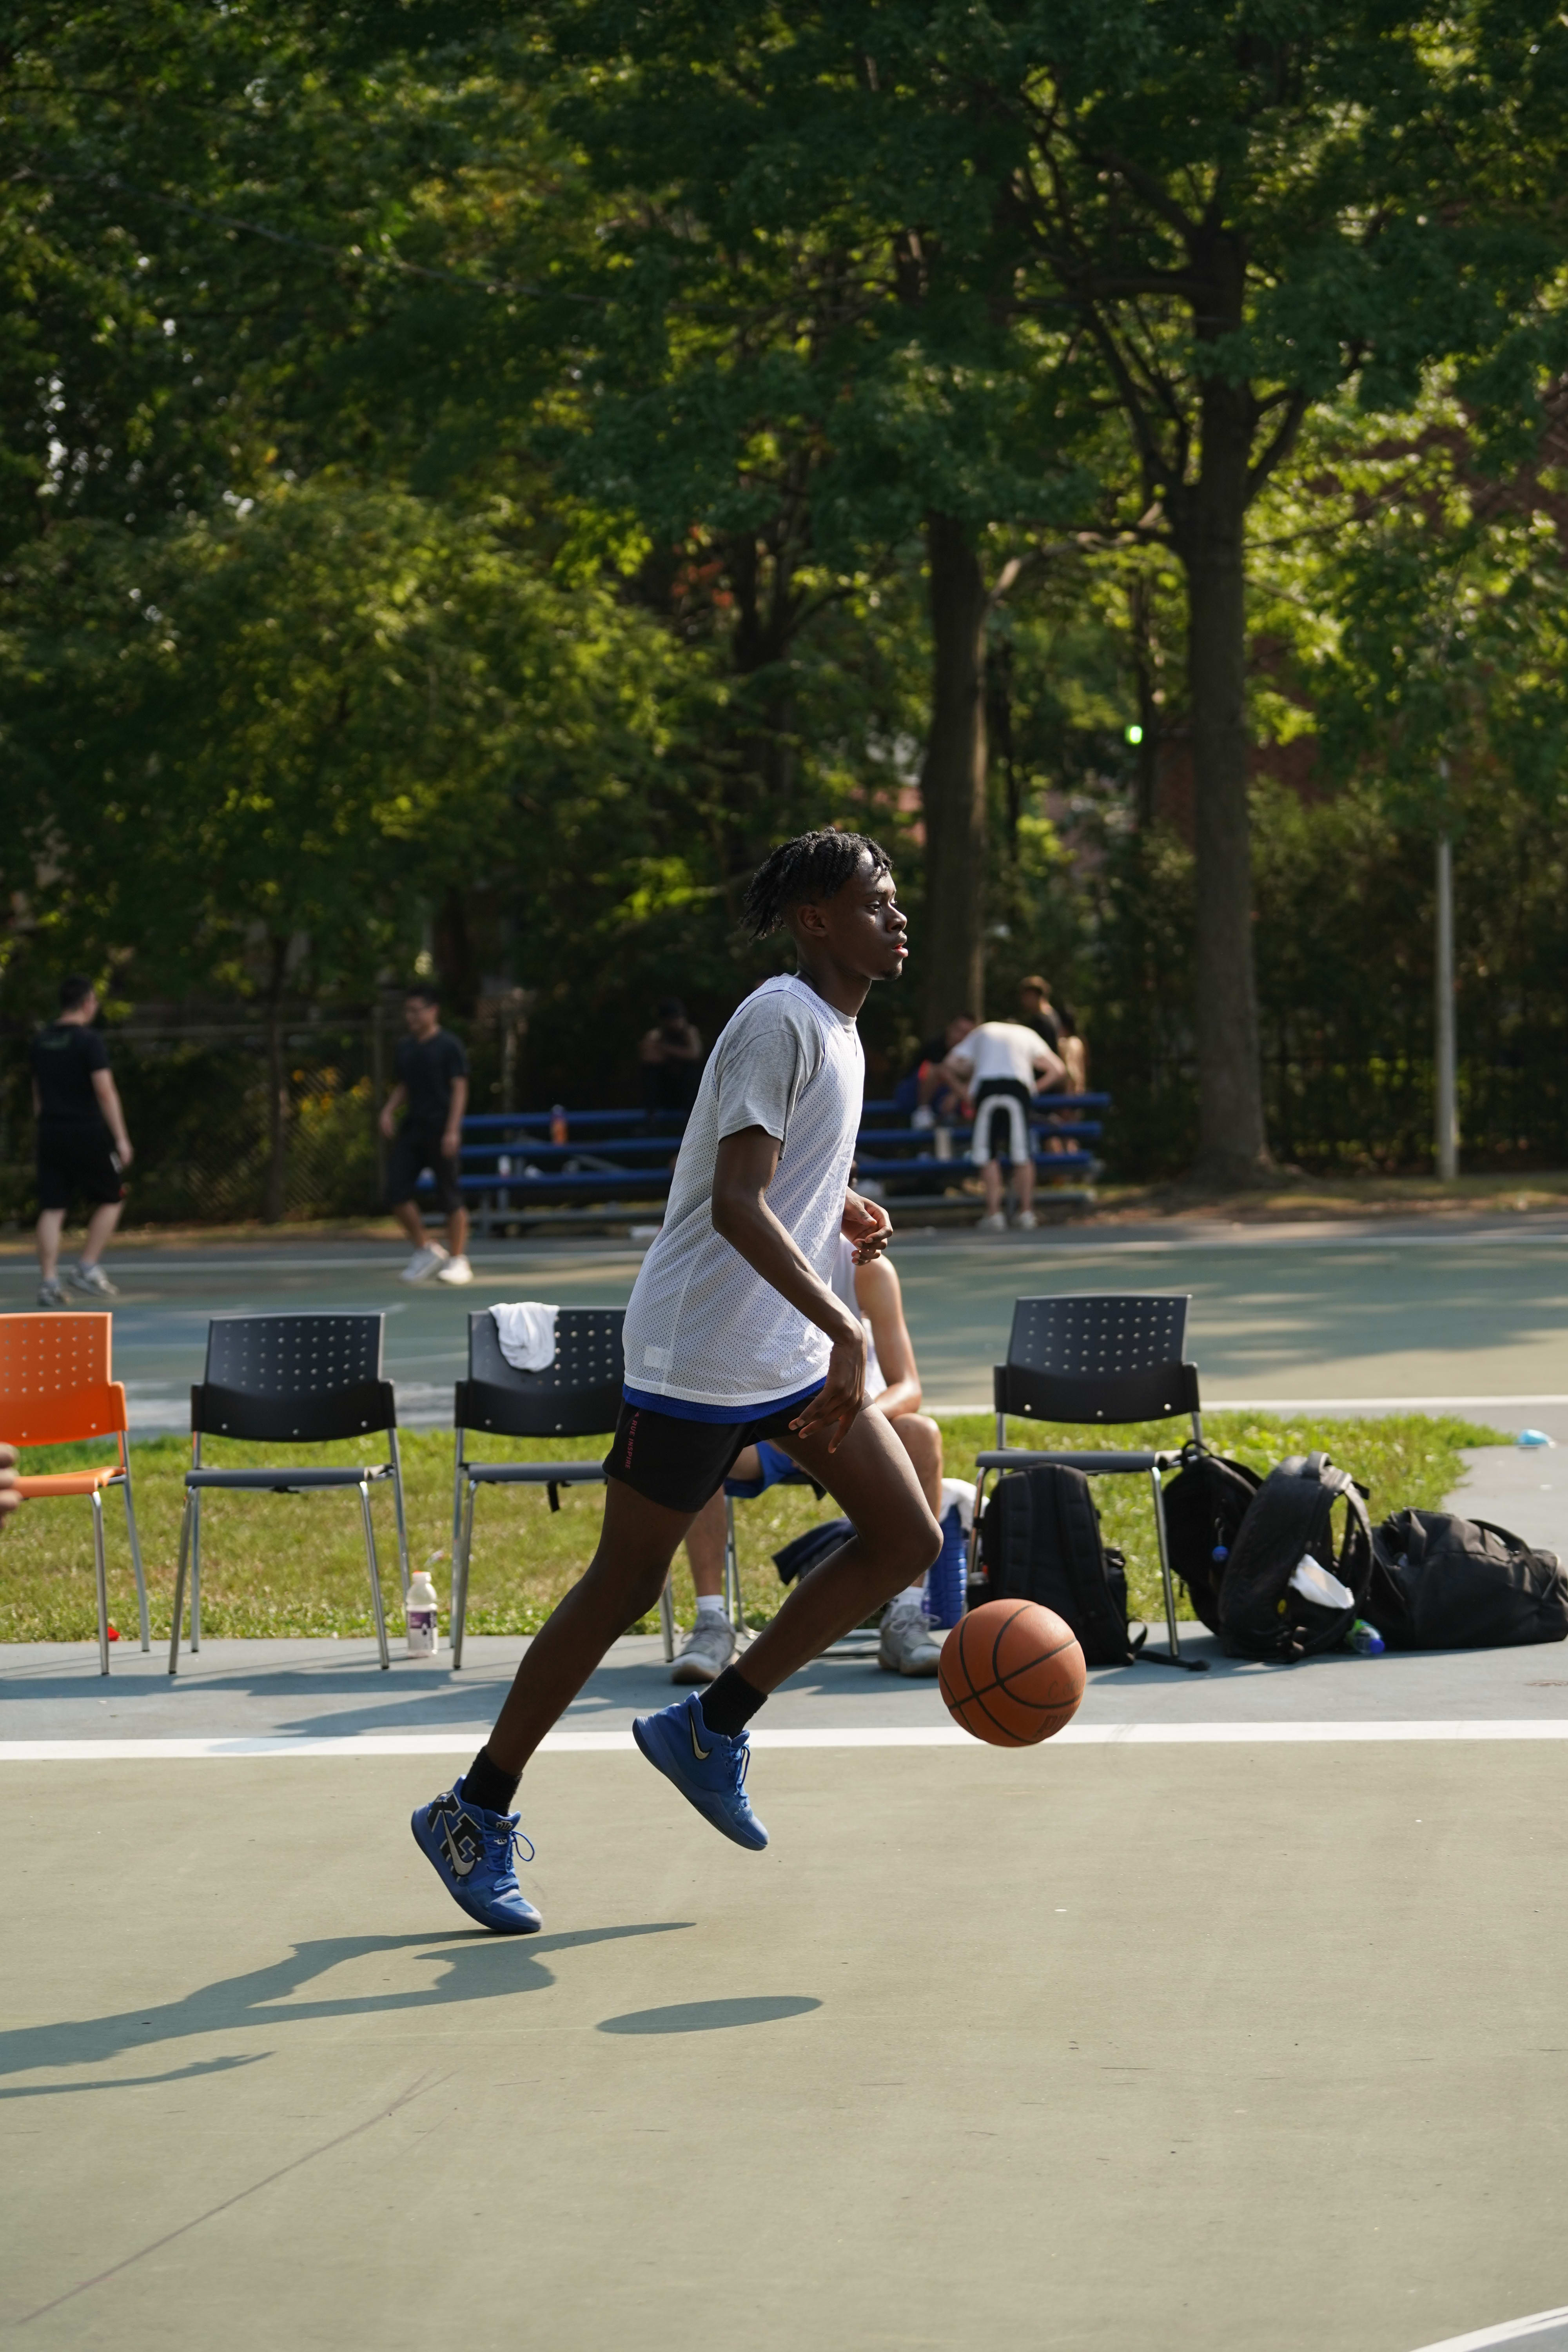 Basketball player dribbling